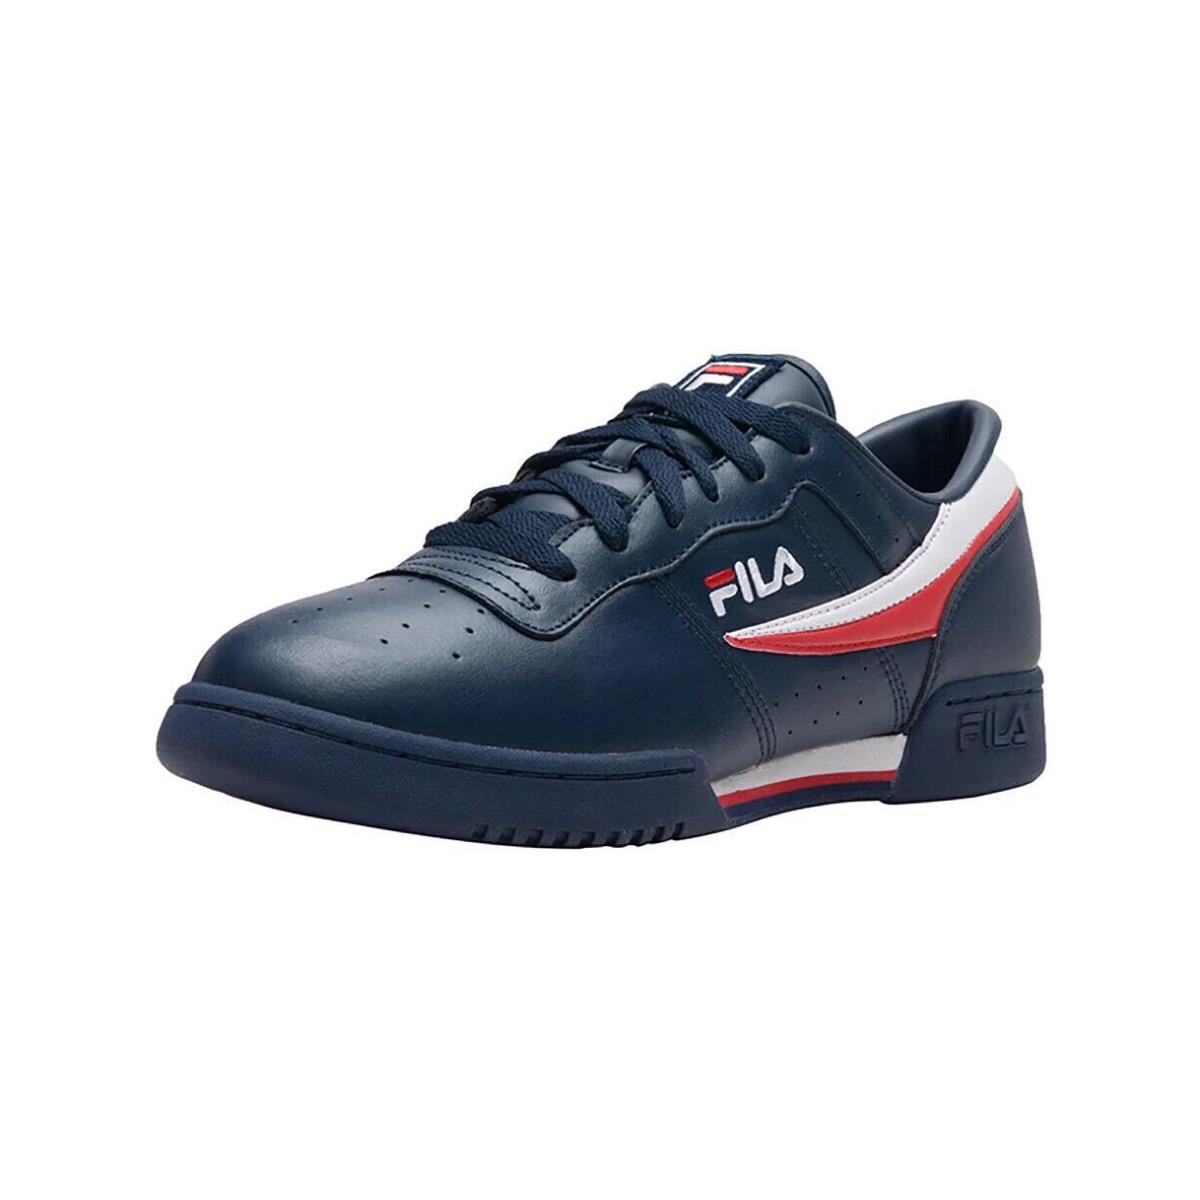 Fila shoes Original Fitness - Navy/White/Red 4